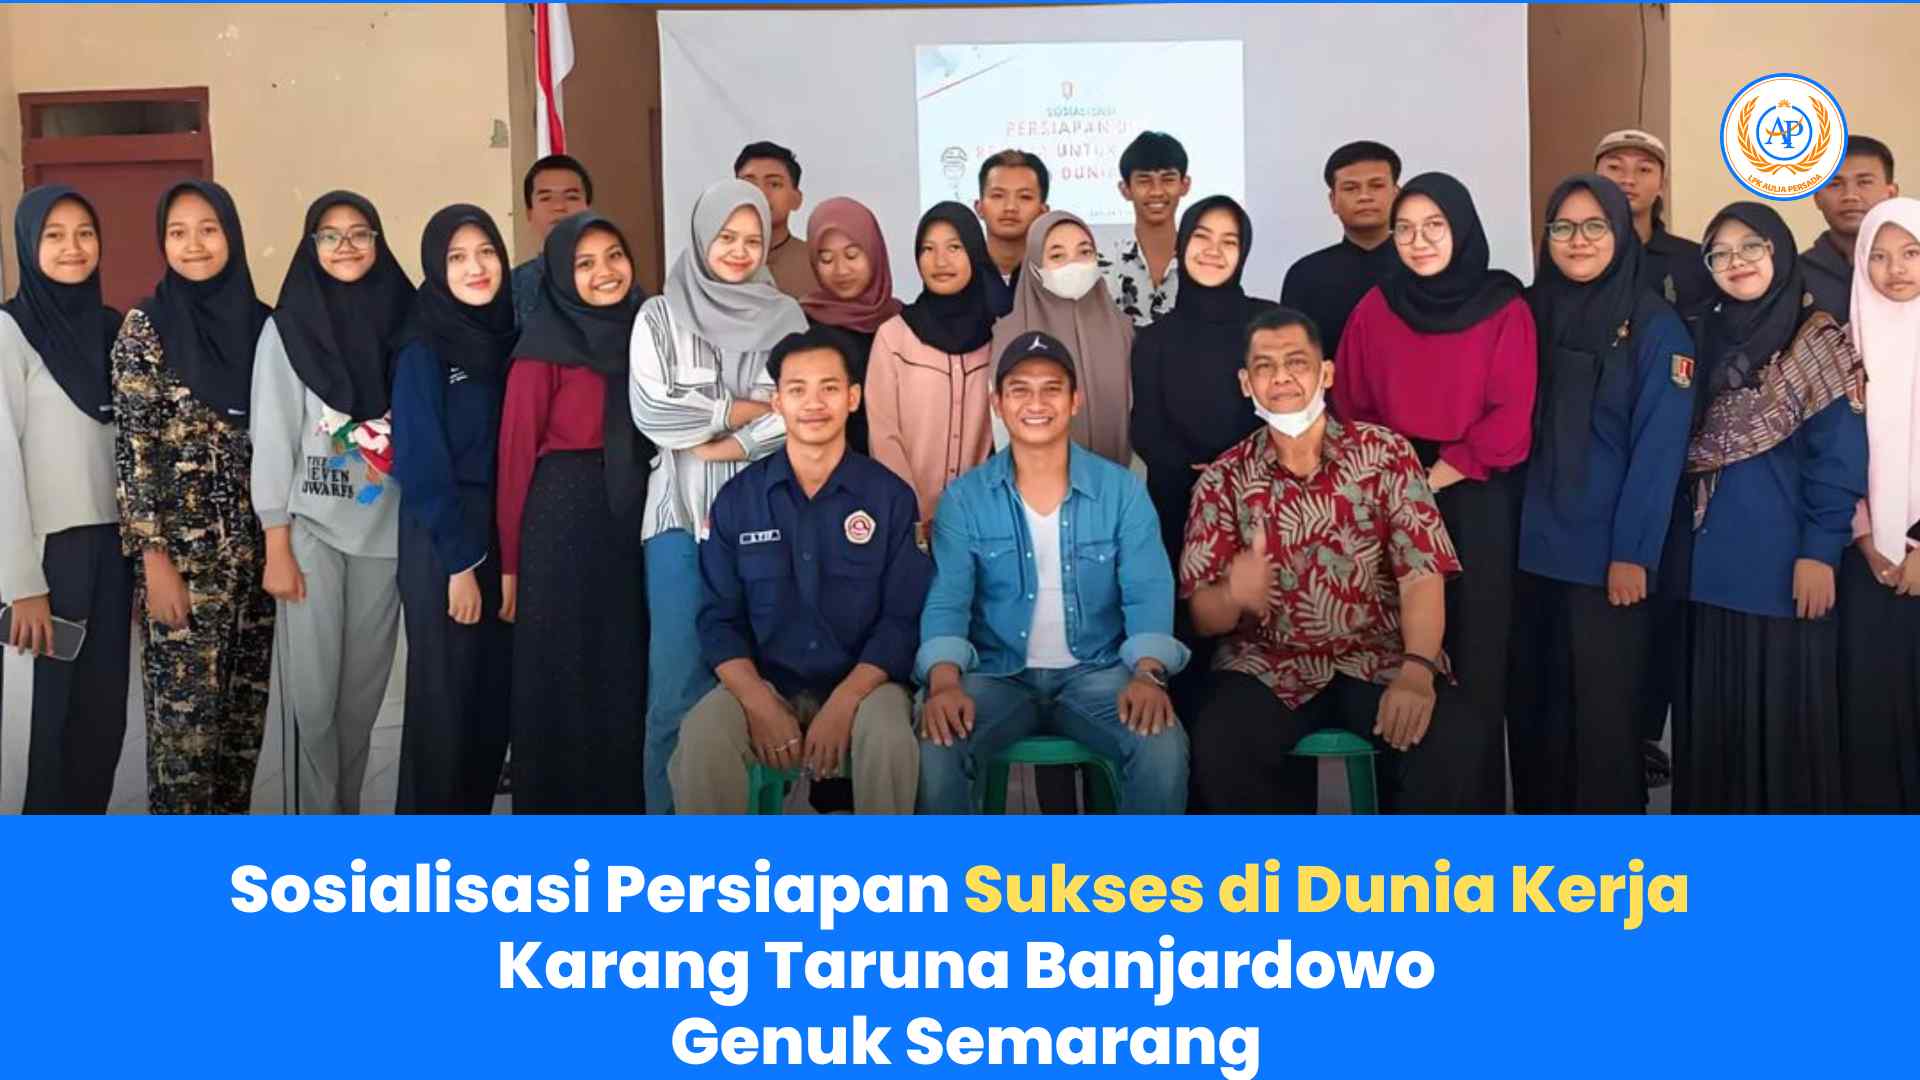 Sosialisasi Persiapan Diri Remaja untuk Sukses di Dunia Kerja Karang Taruna Banjardowo Genuk Semarang